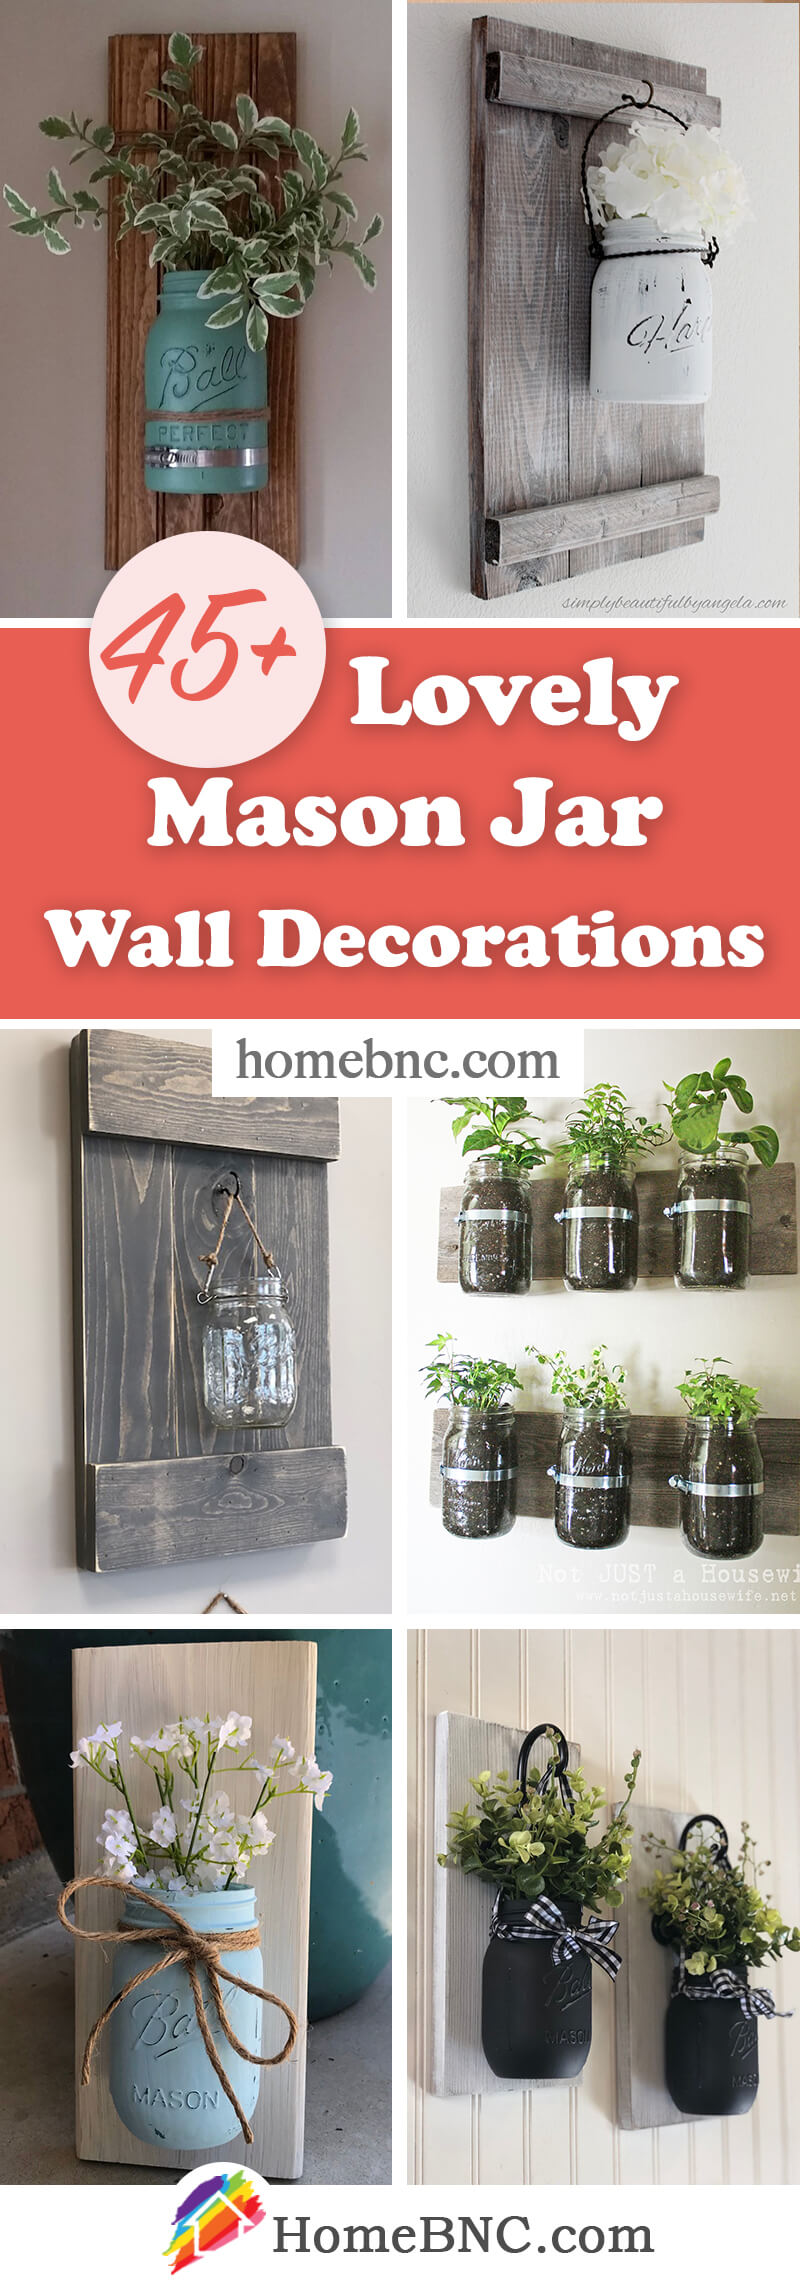 Mason Jar Wall Decorations